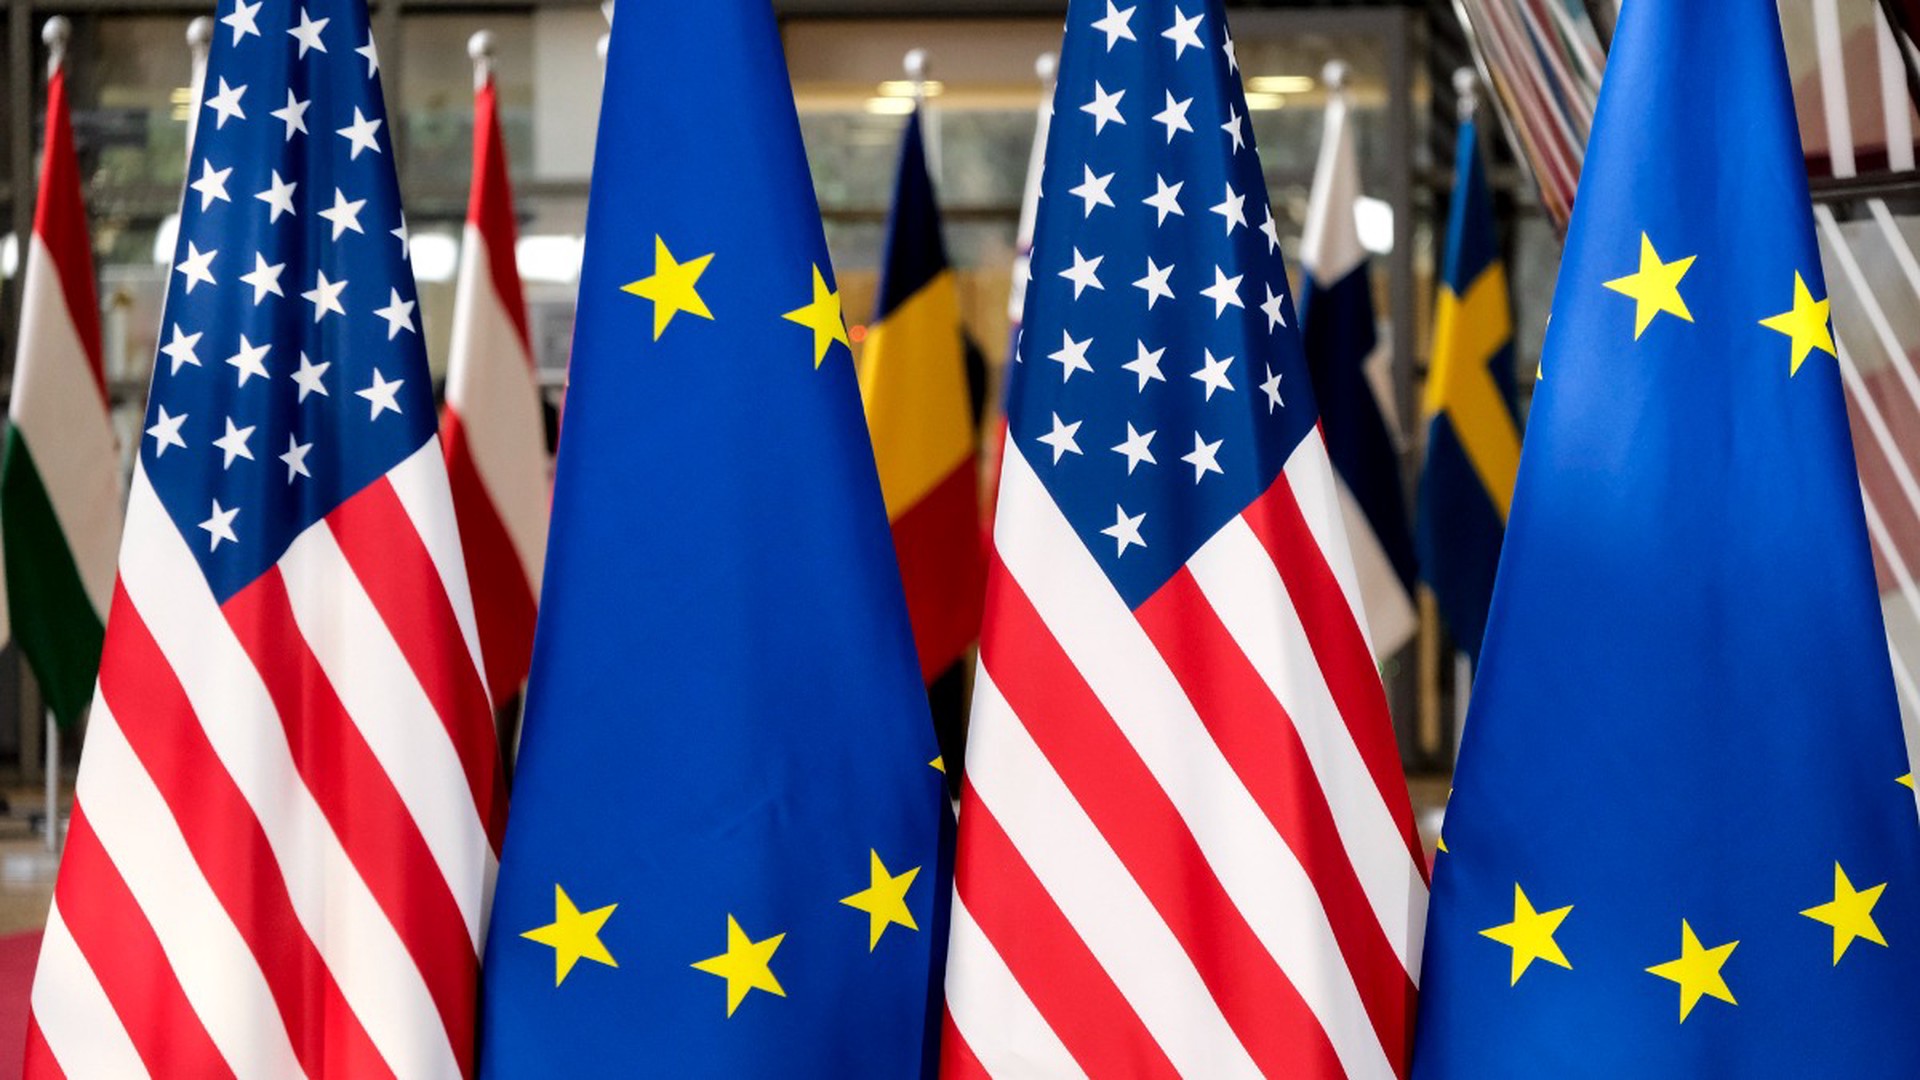 Vanguardia: Европа зависит от США и не может защититься сама